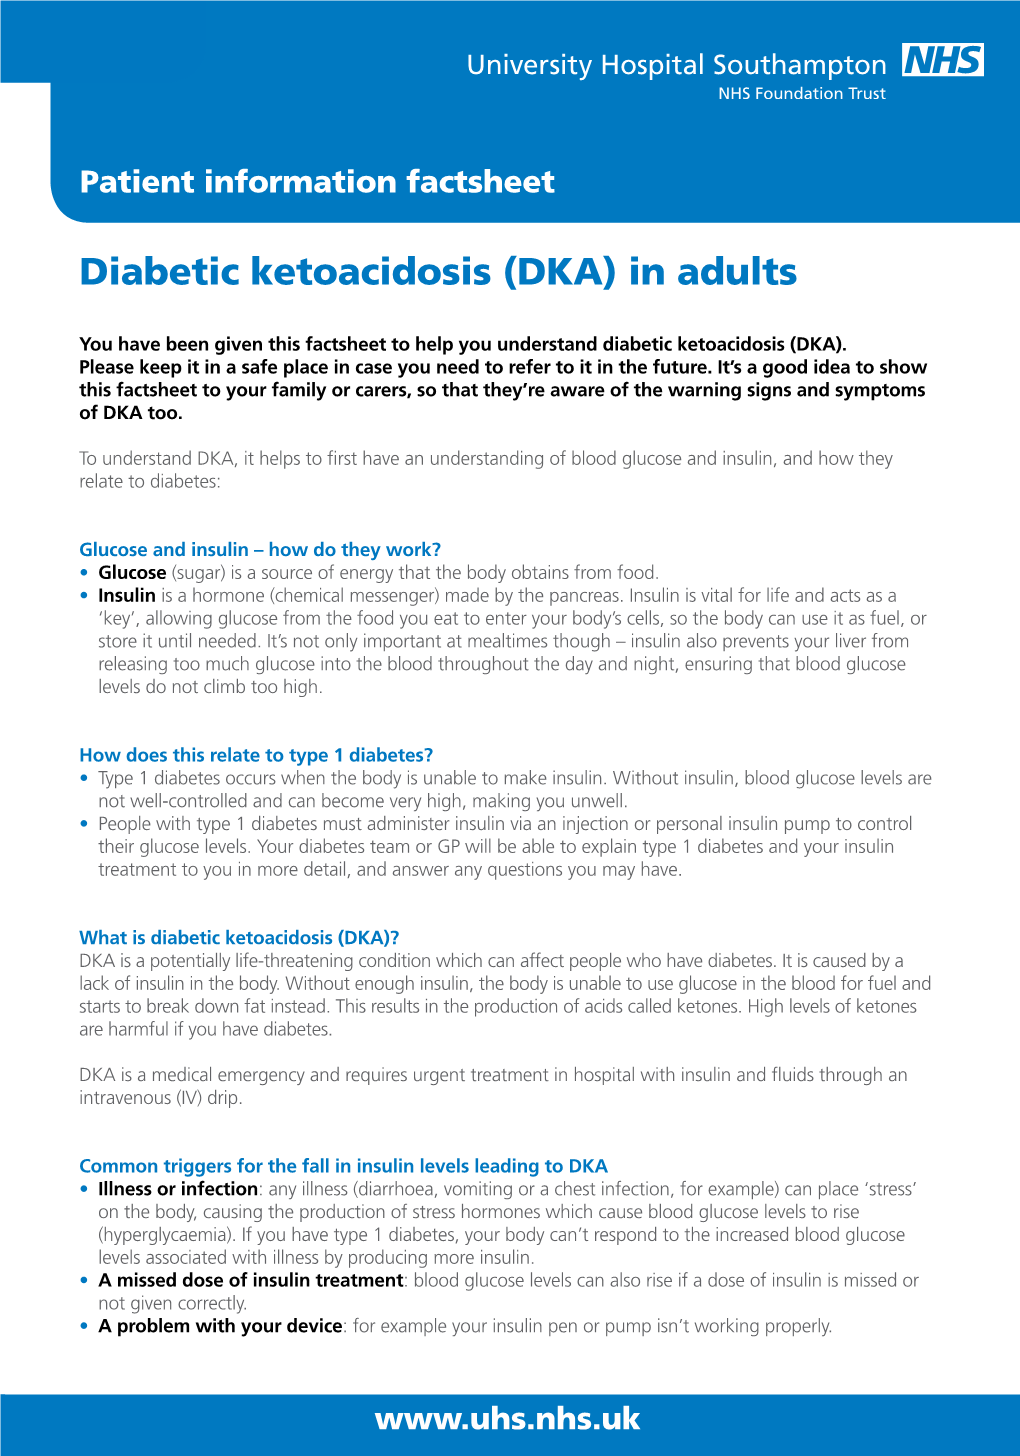 Diabetic Ketoacidosis (DKA) in Adults